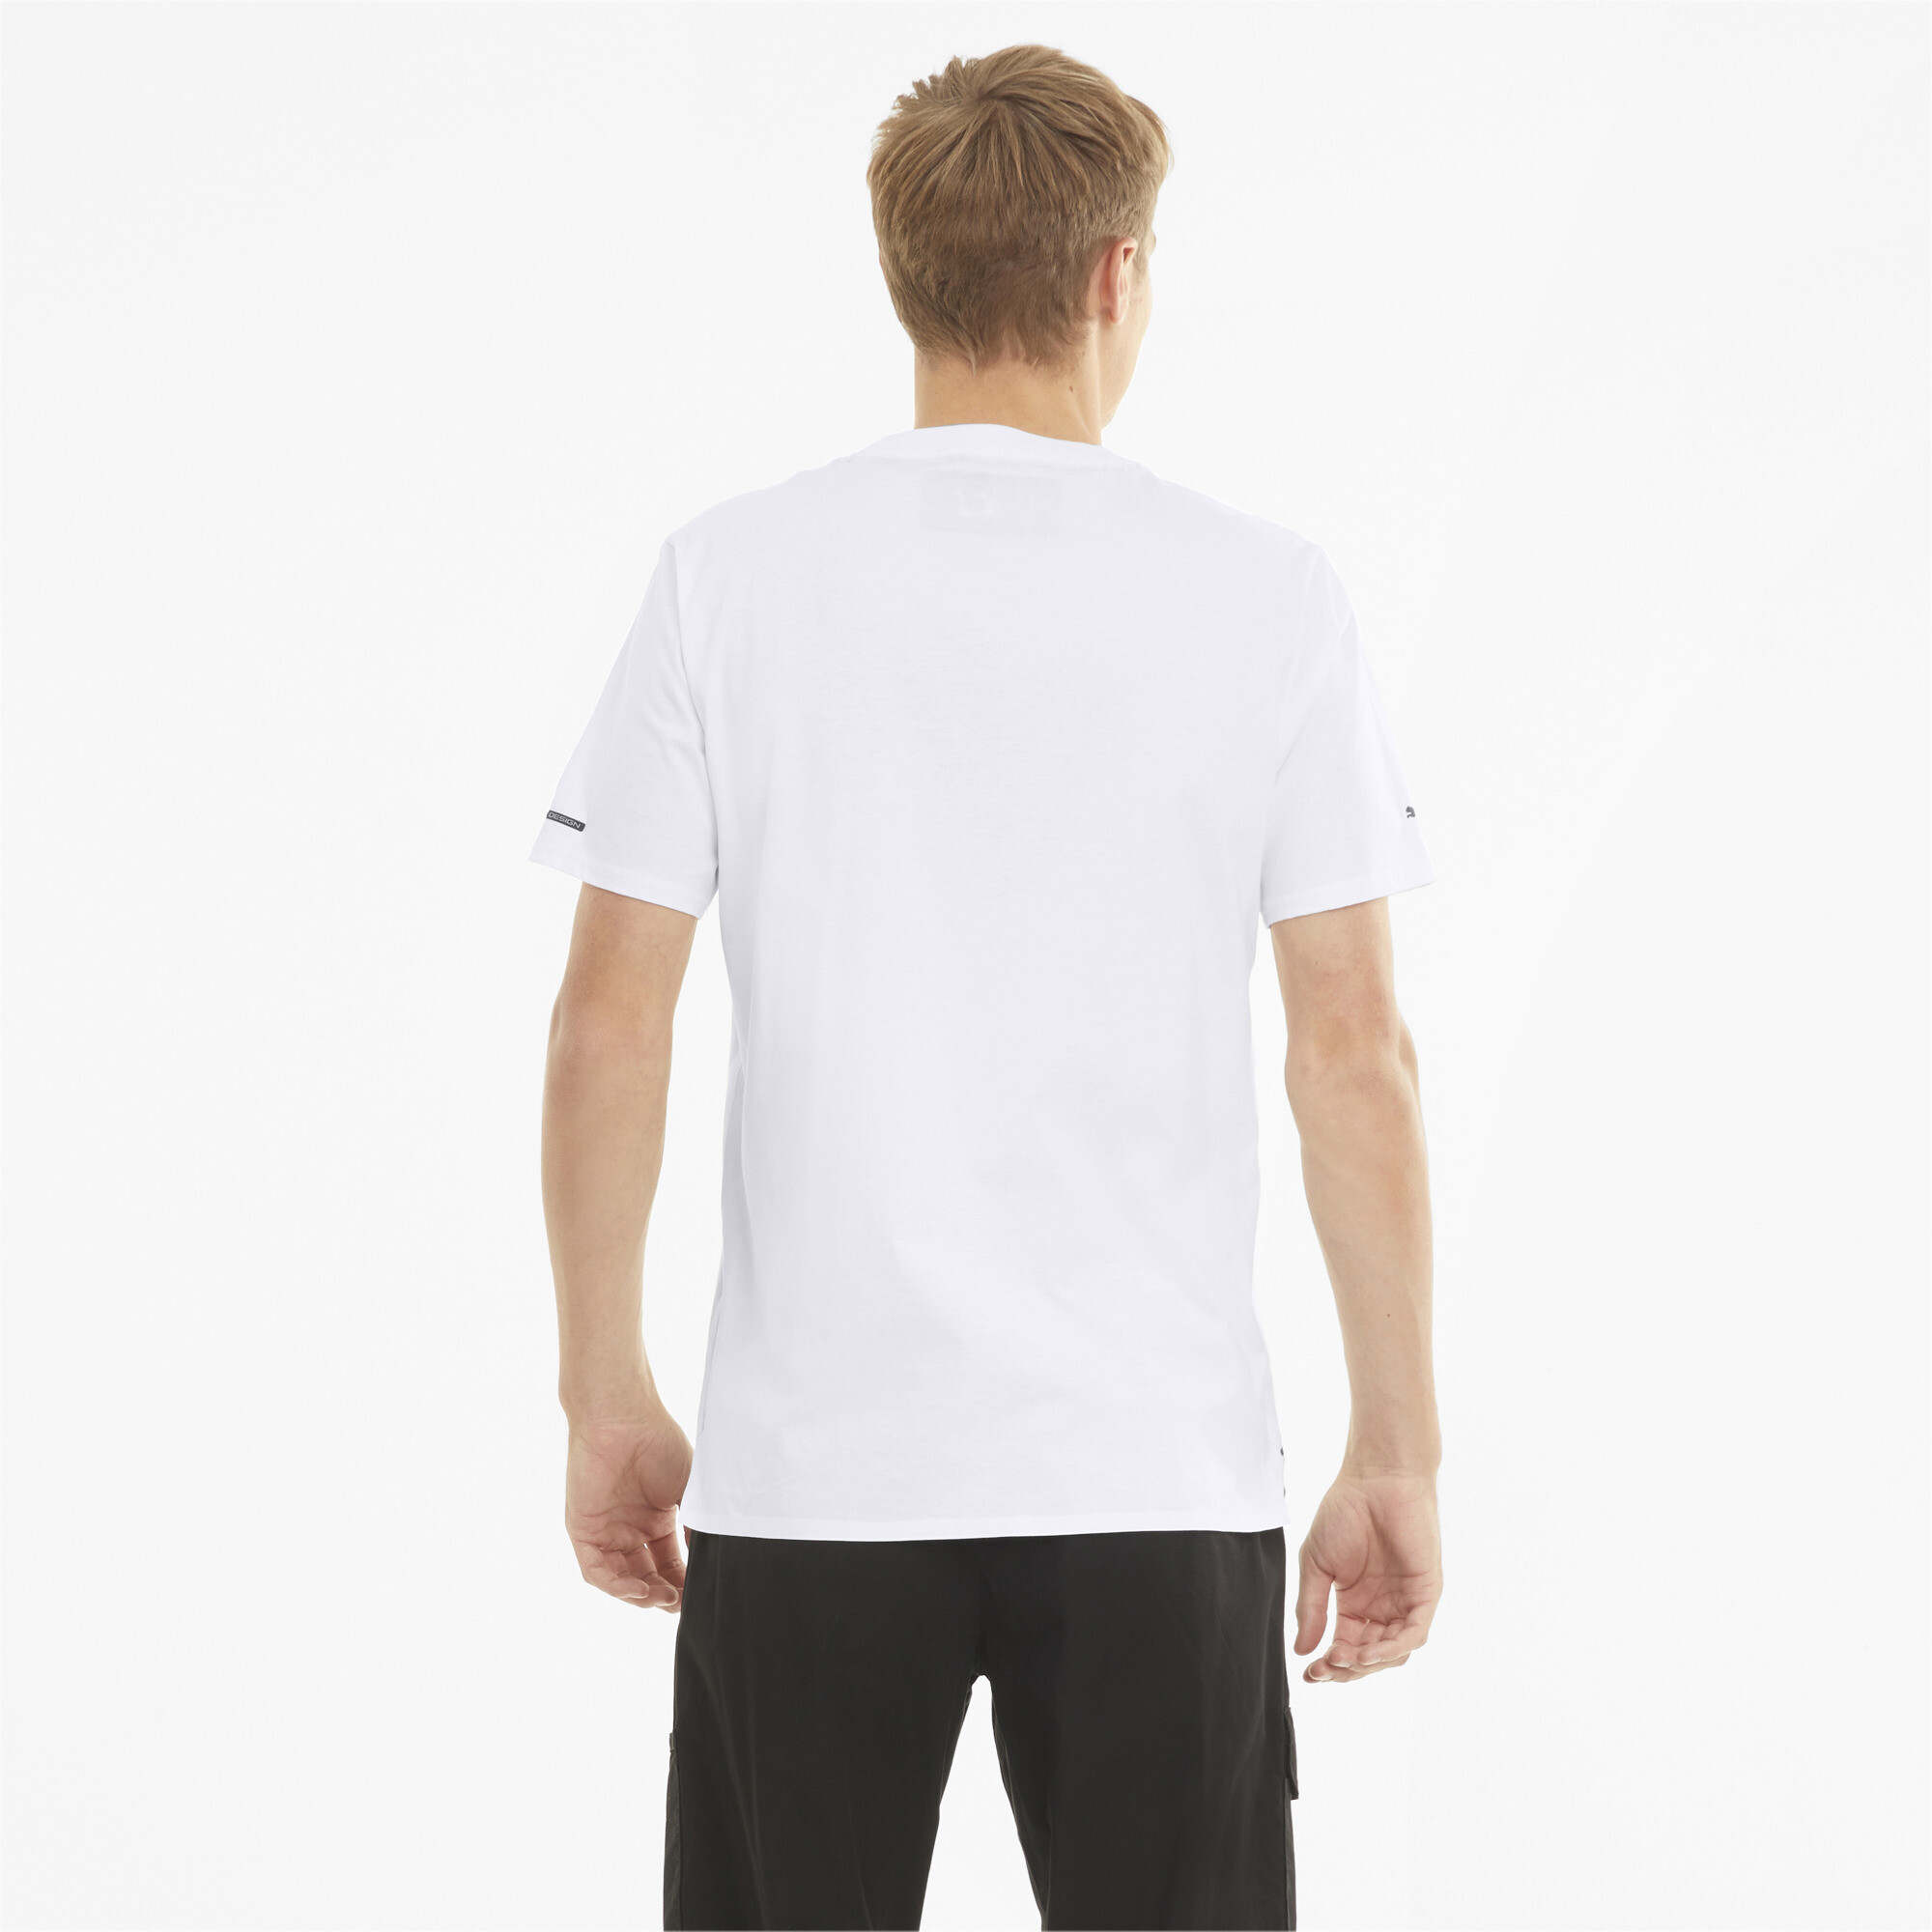 Men's PUMA Porsche Design Essential T-Shirt In White, Size Large